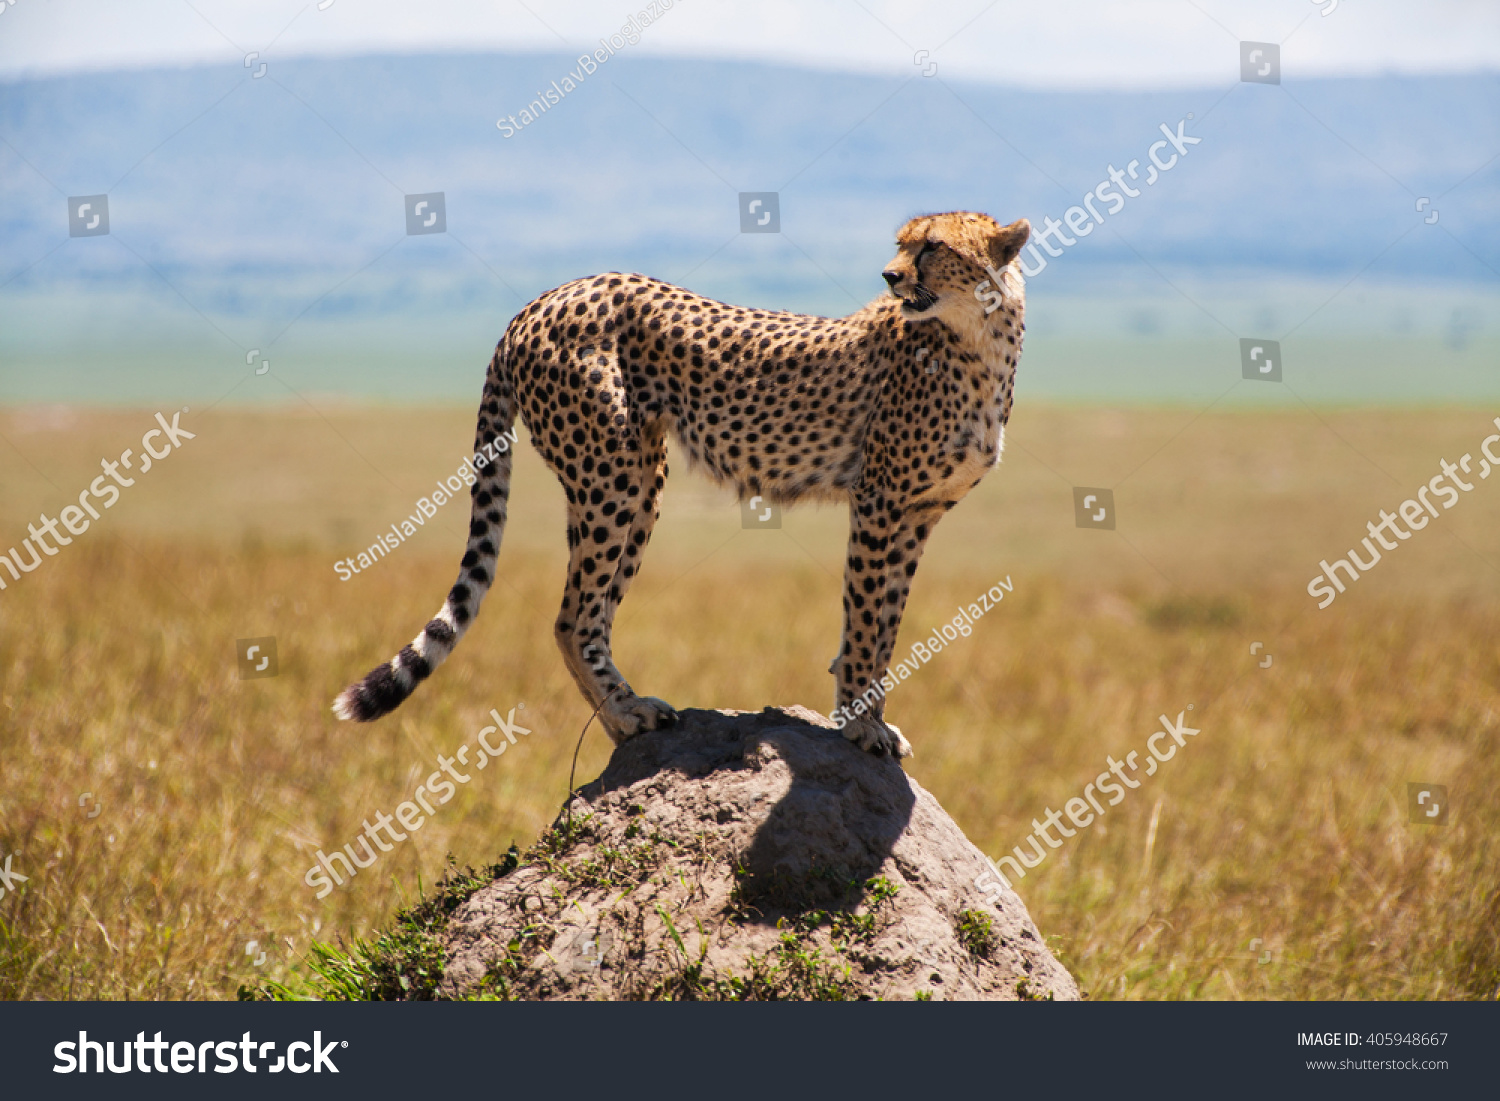 3dRose lsp_71043_6 Kenya Two cheetahs Plug Outlet Cover Masai Mara National Reserve 